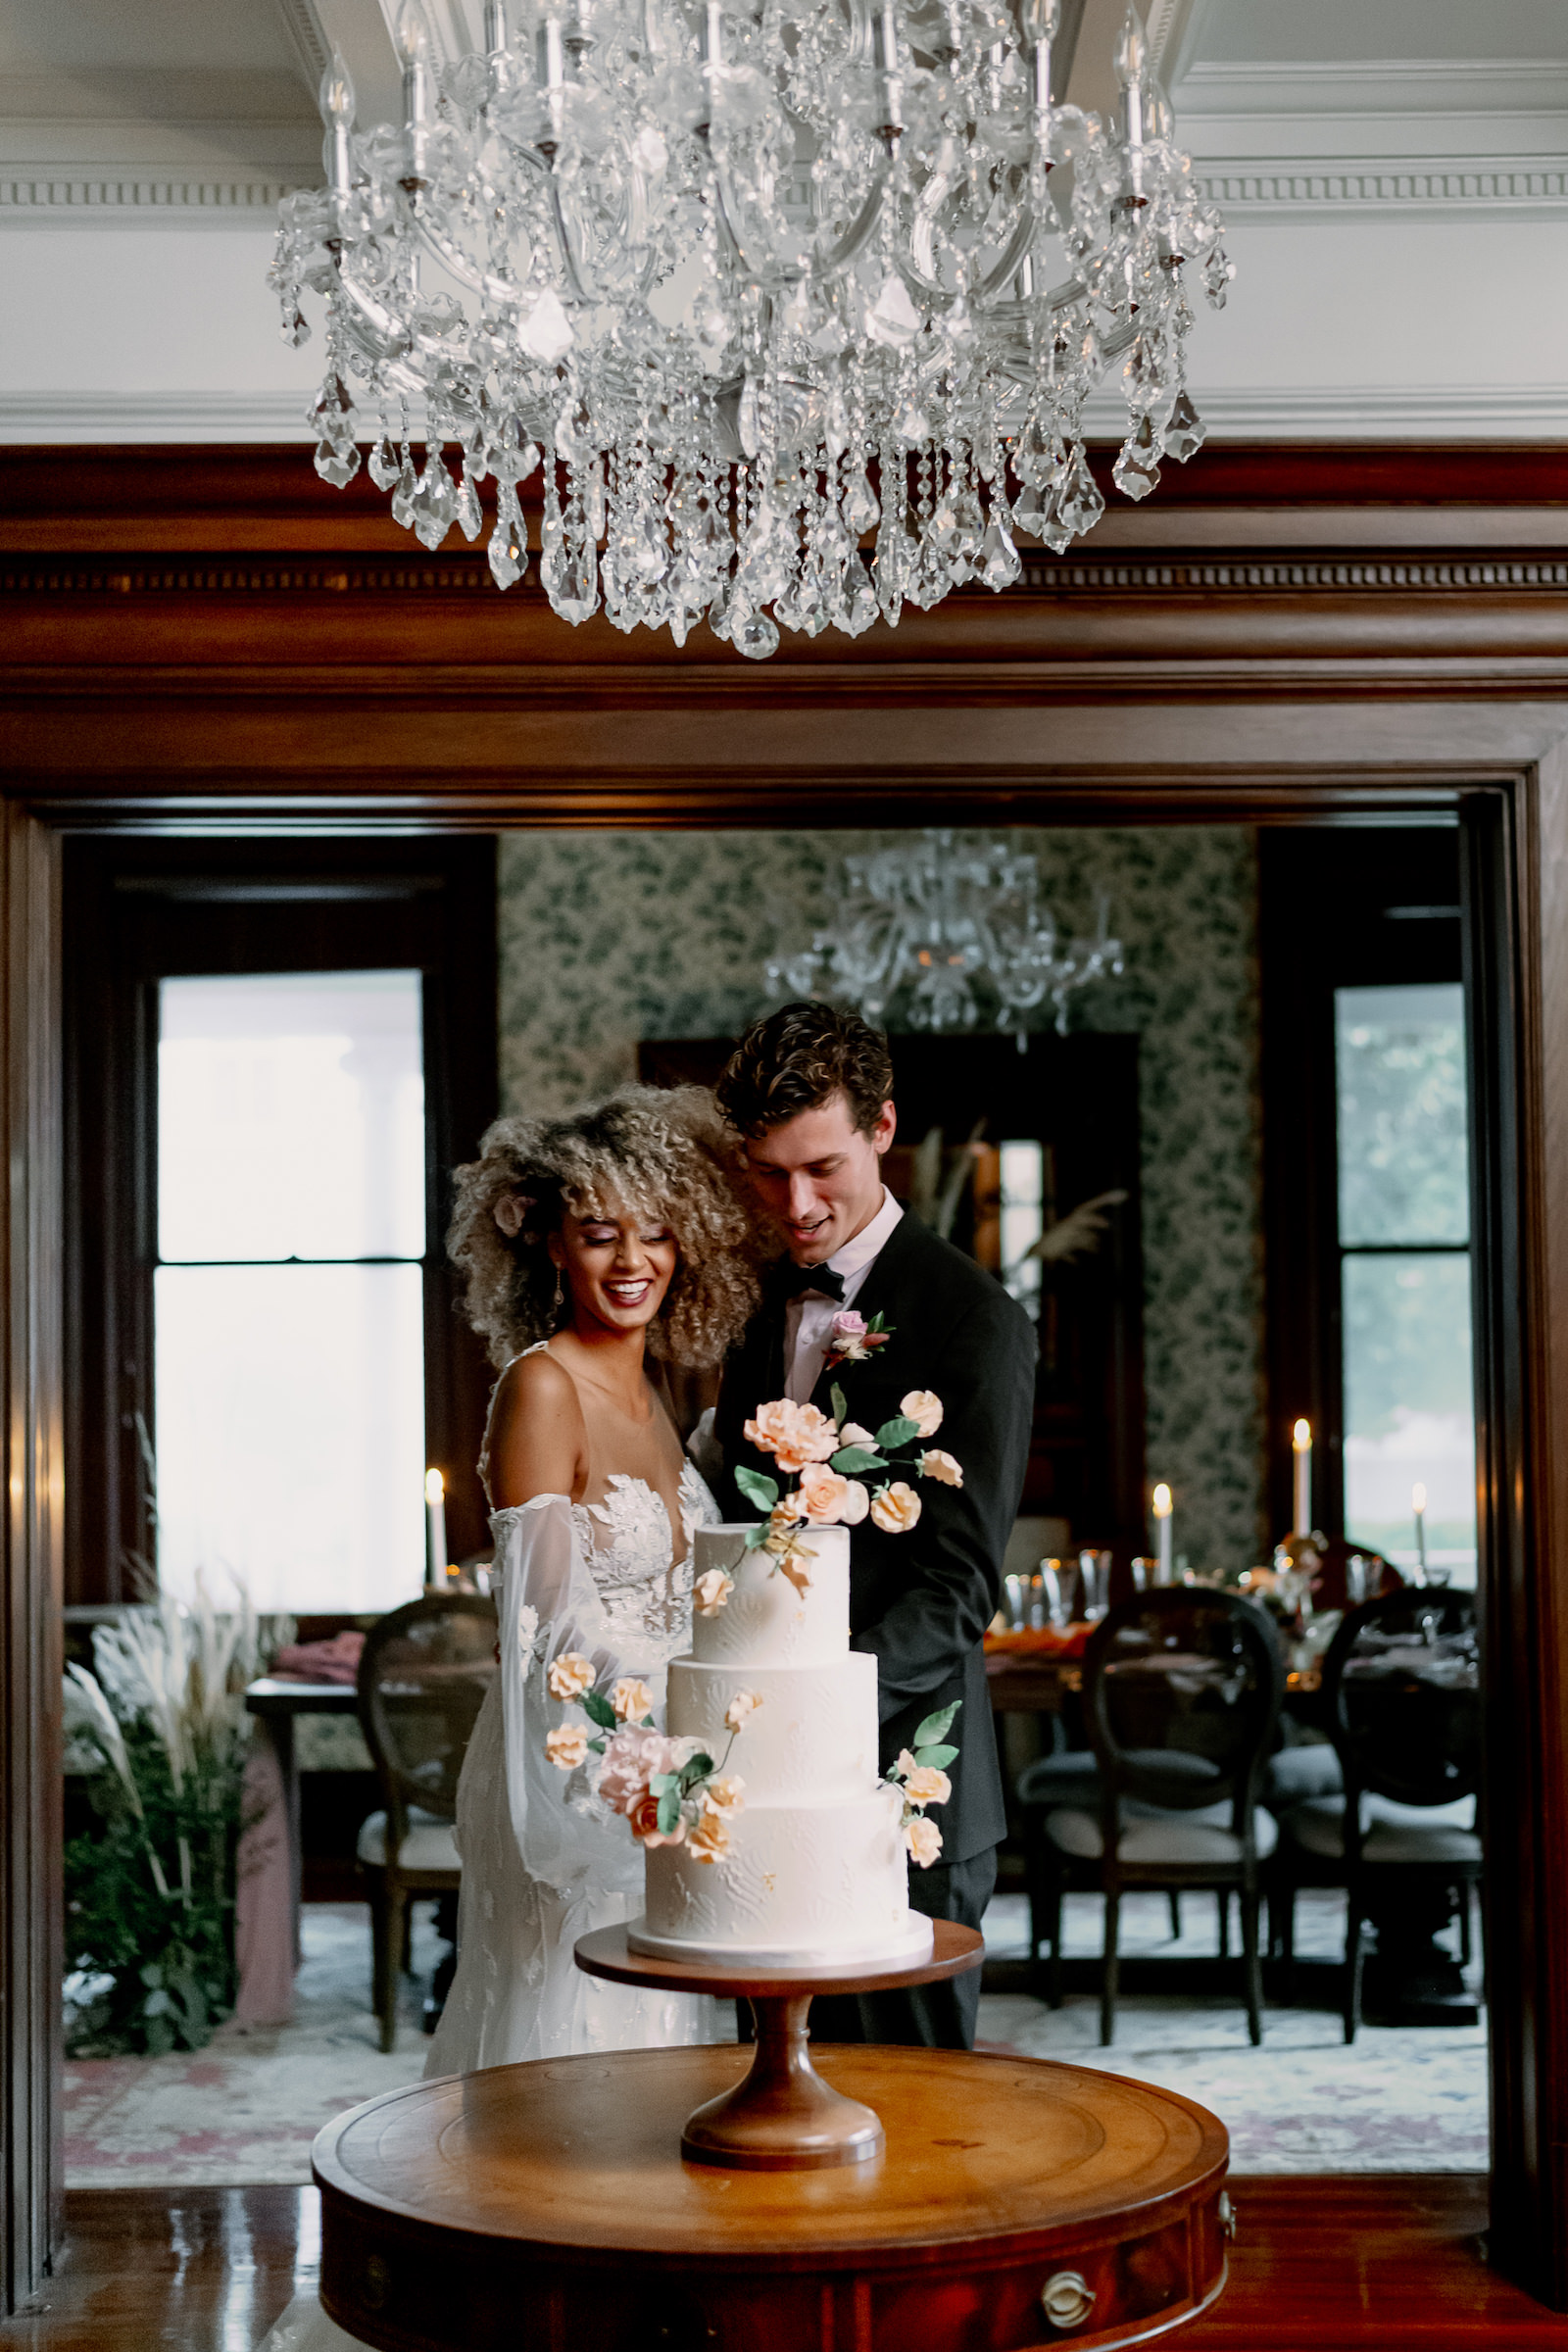 Vintage European Wedding, Bride and Groom Cutting Three Tier White and Sugar Flower Wedding Cake | Tampa Bay Wedding Photographer Dewitt for Love